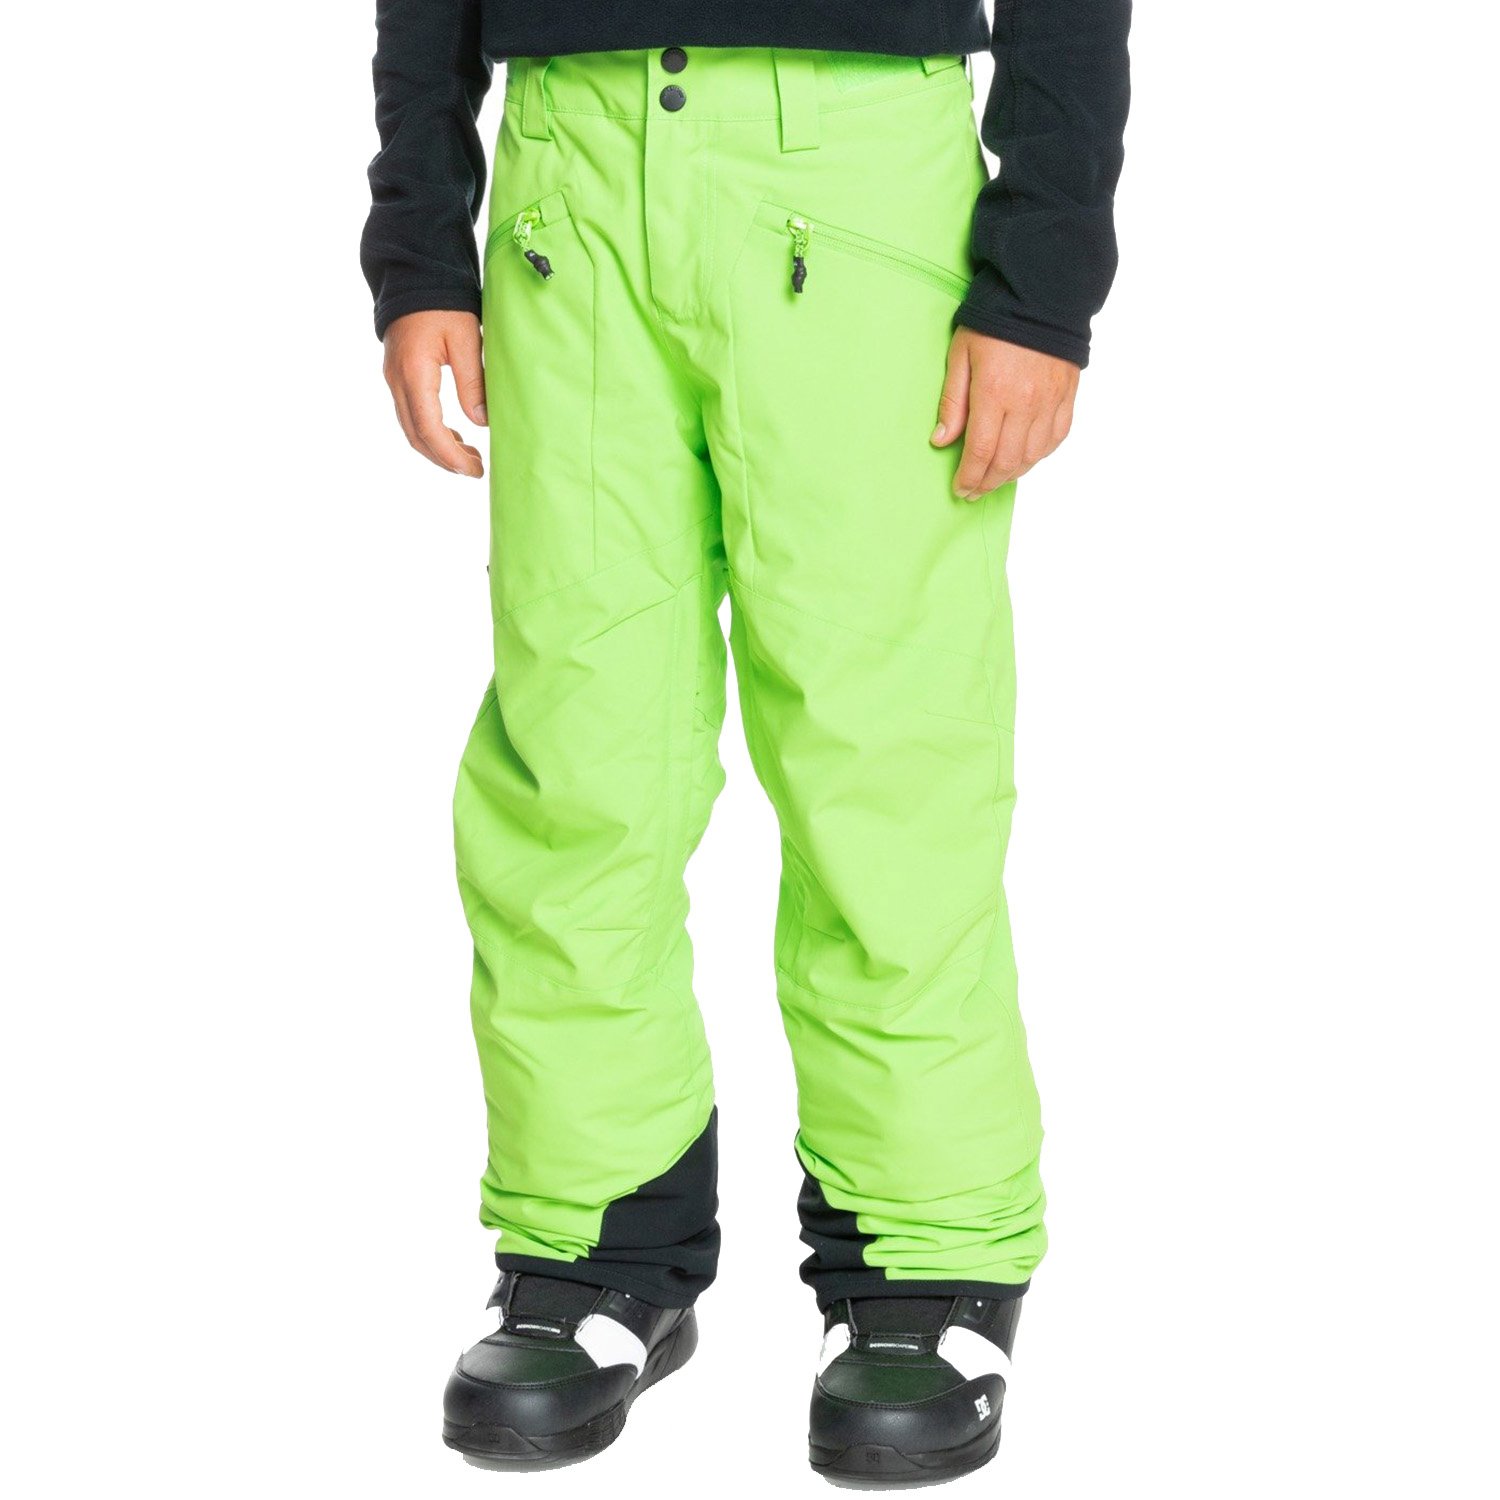 Quiksilver Boundry Çocuk Snowboard Pantolonu - Yeşil - 1